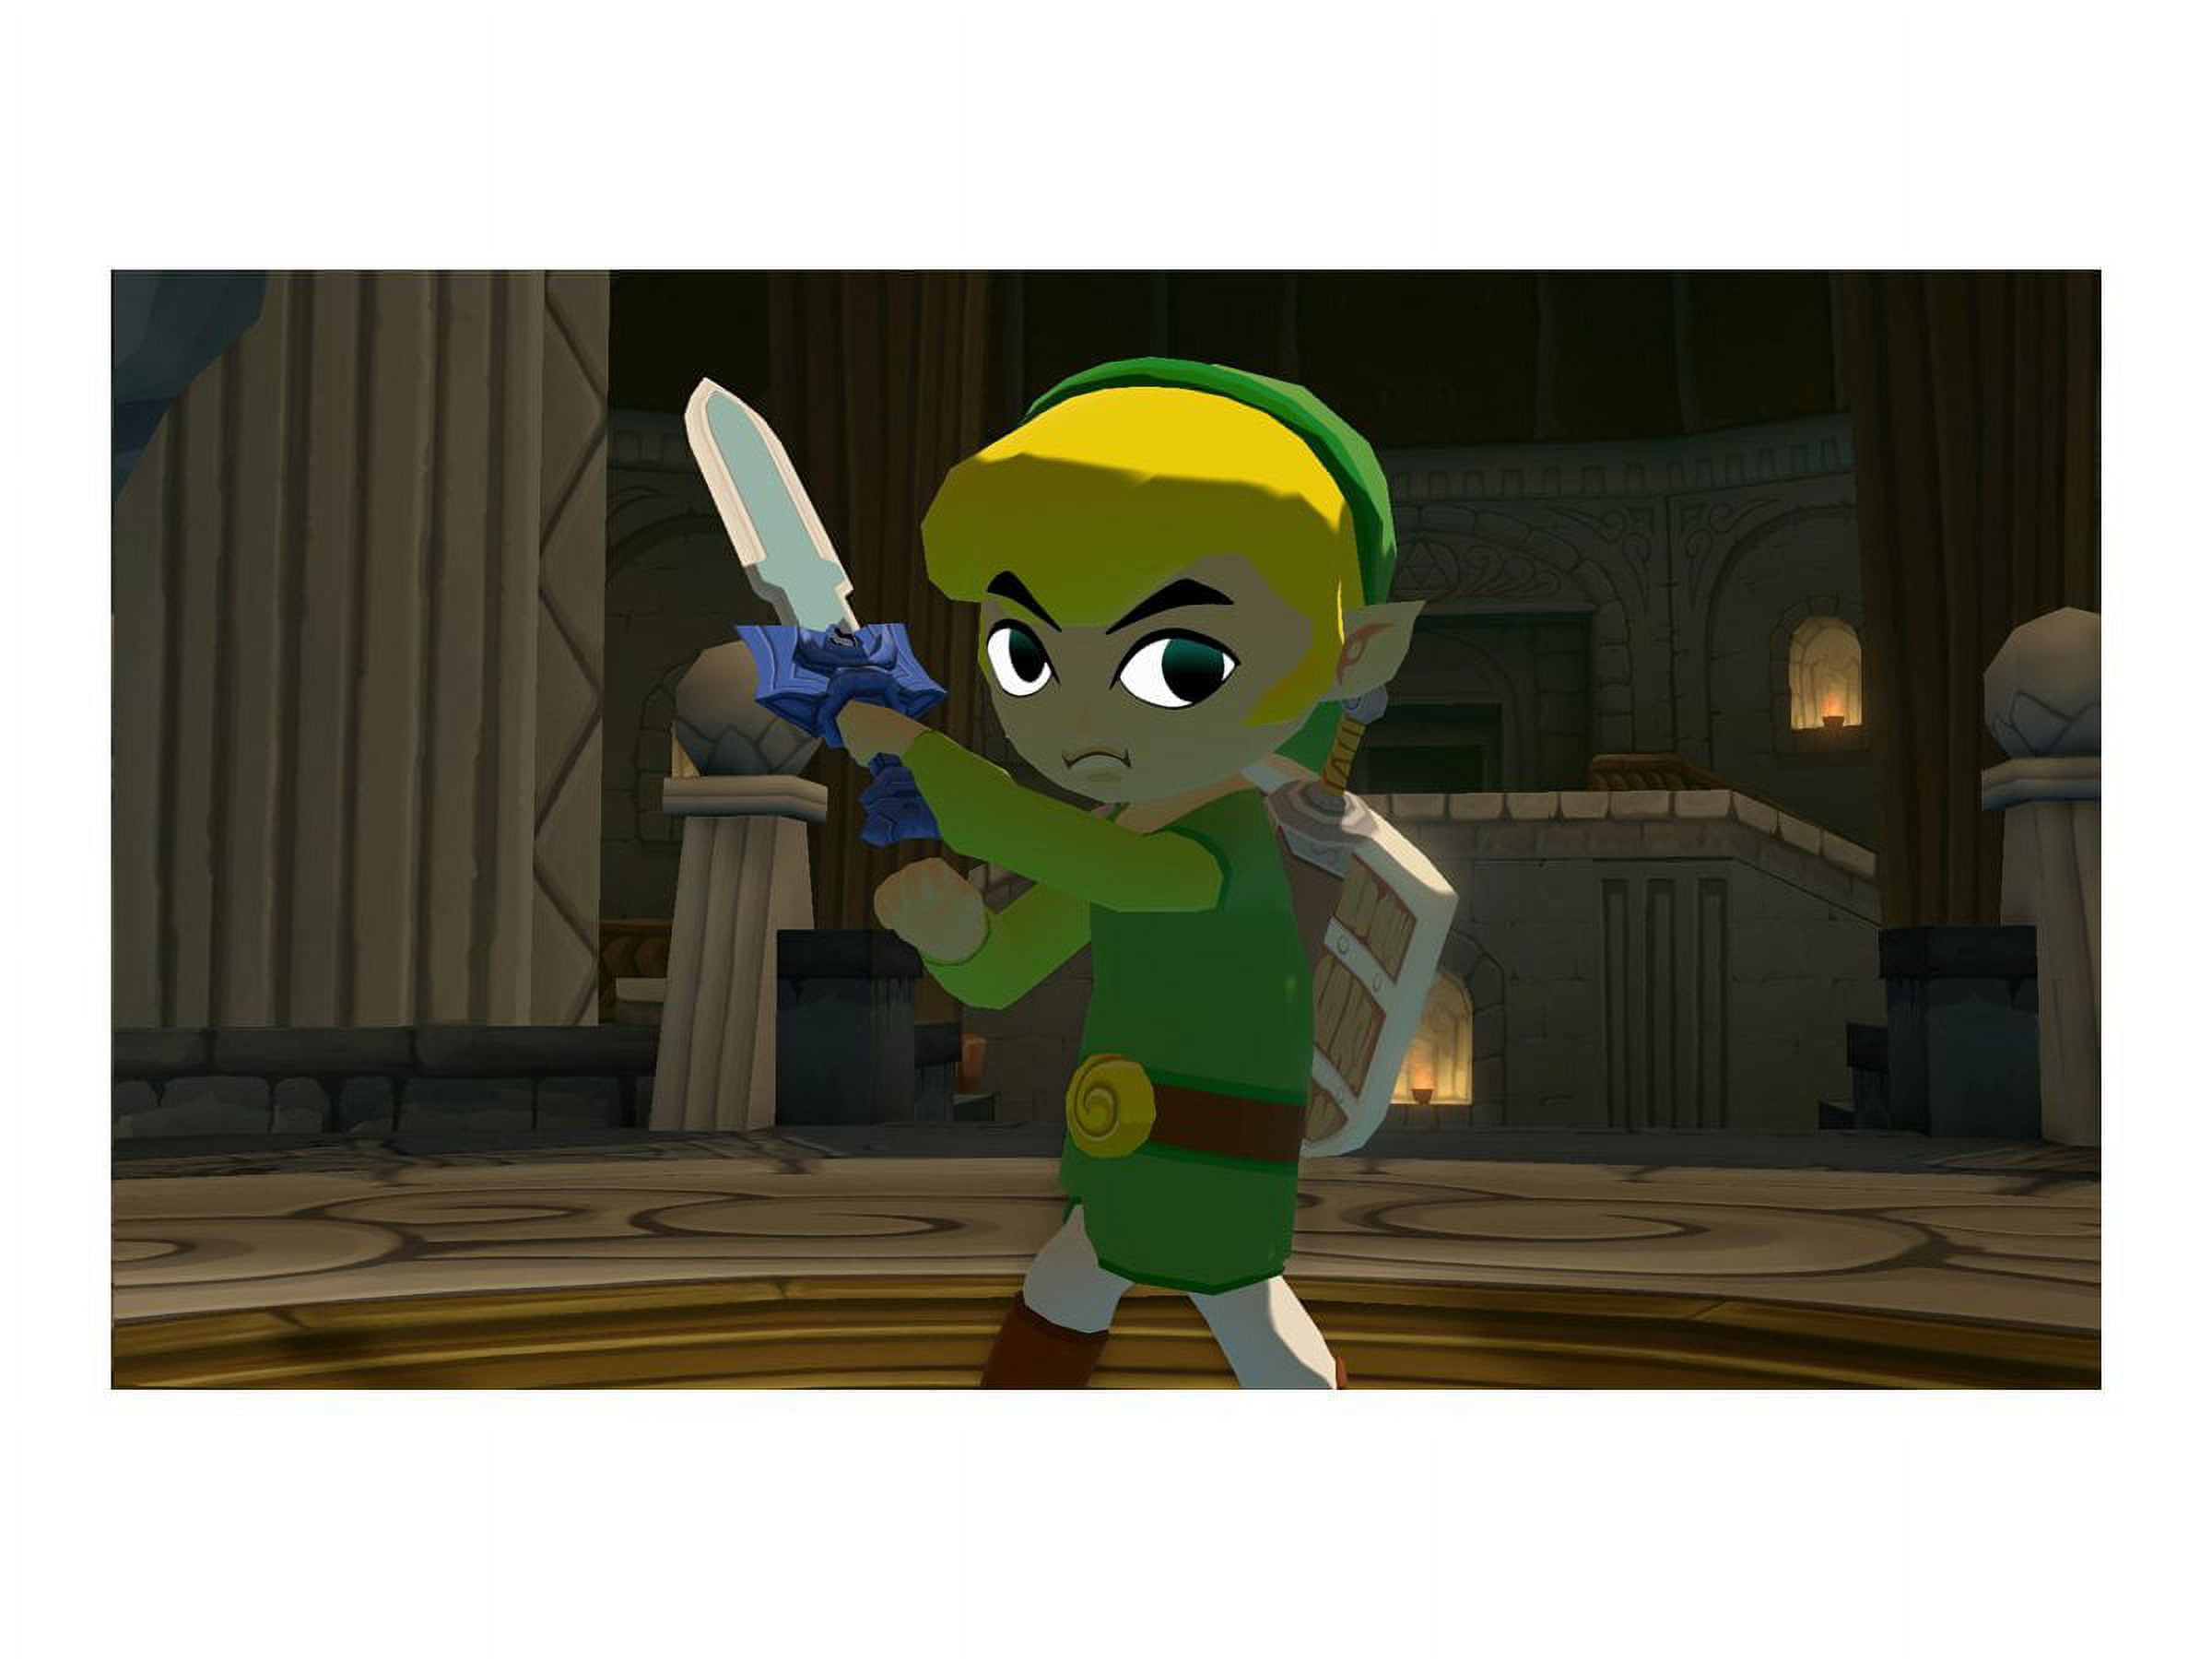 Skin Nintendo Wii U Adesivo - The Legend of Zelda Wind Waker em Promoção na  Americanas